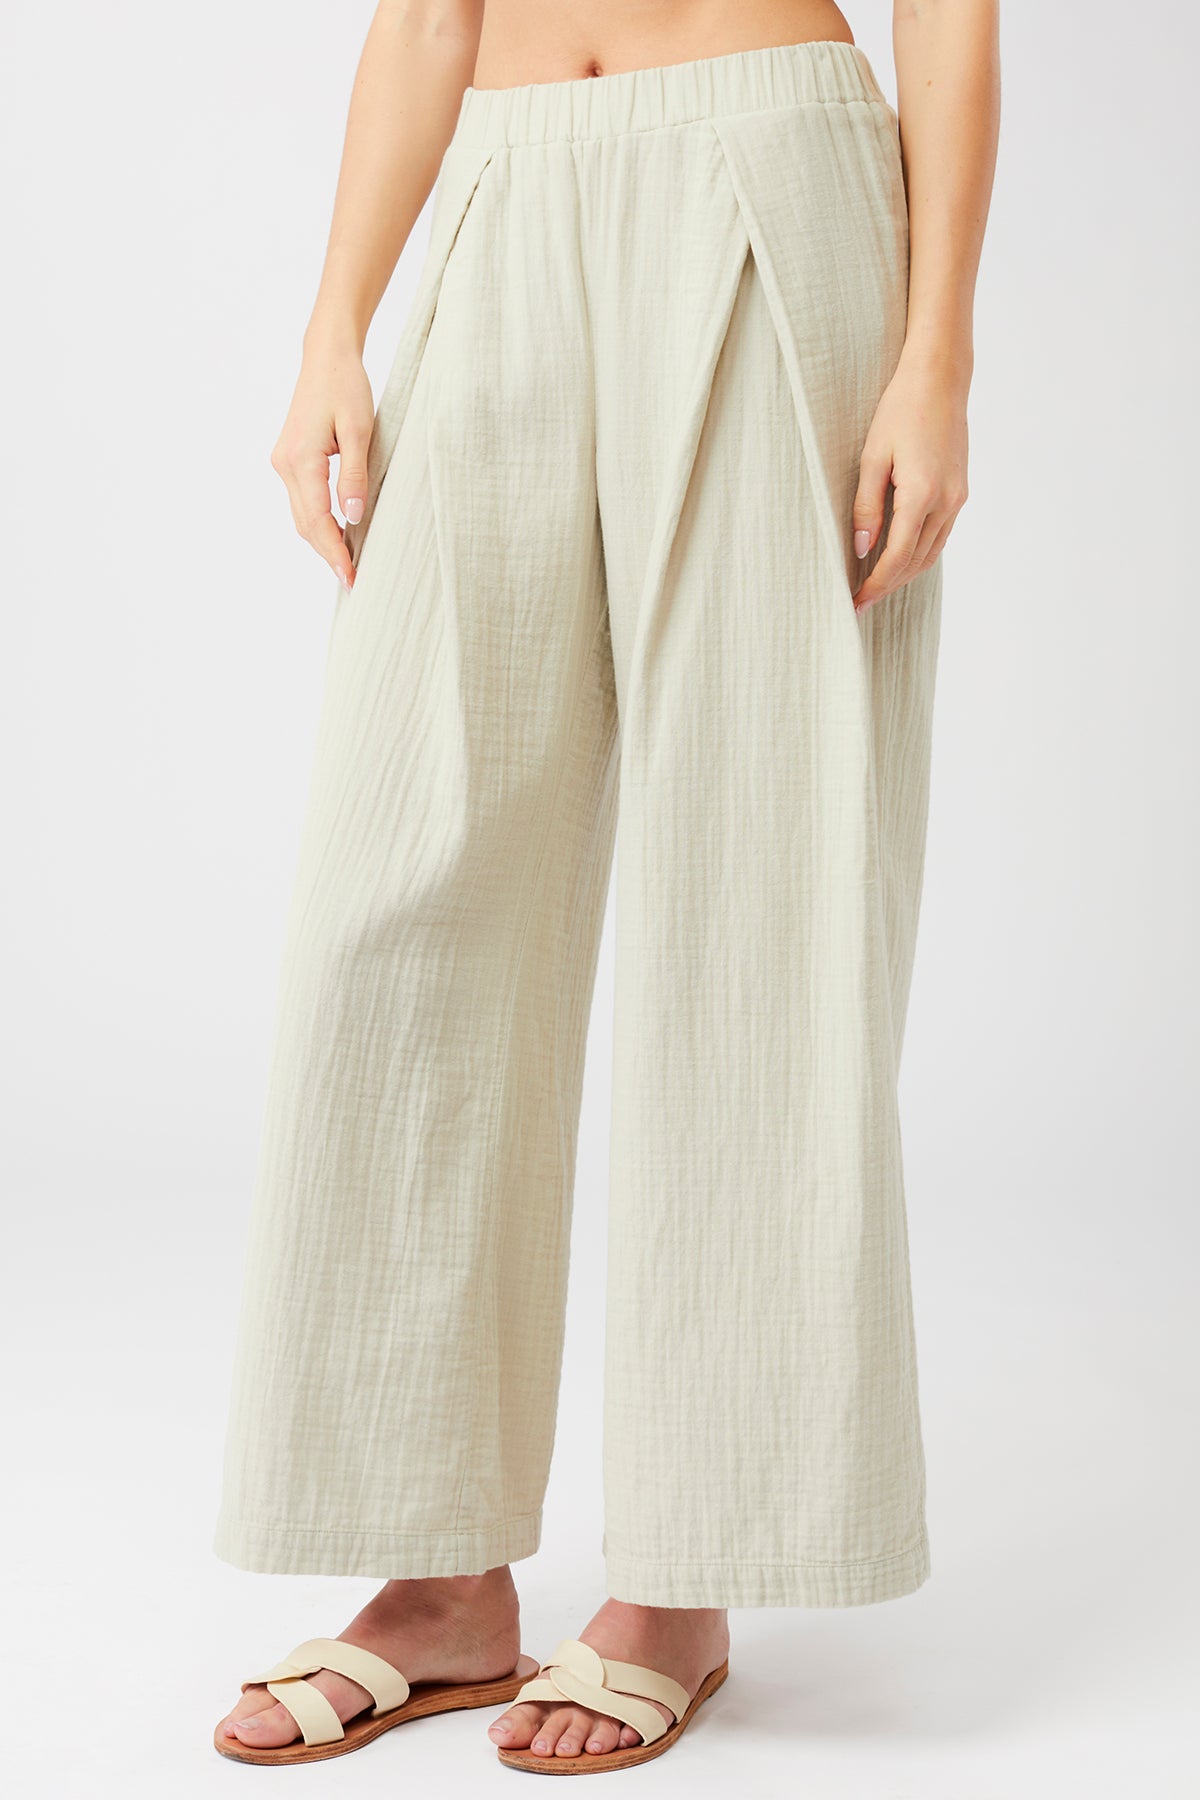 GOTS Organic Cotton Plain Yoga Trouser